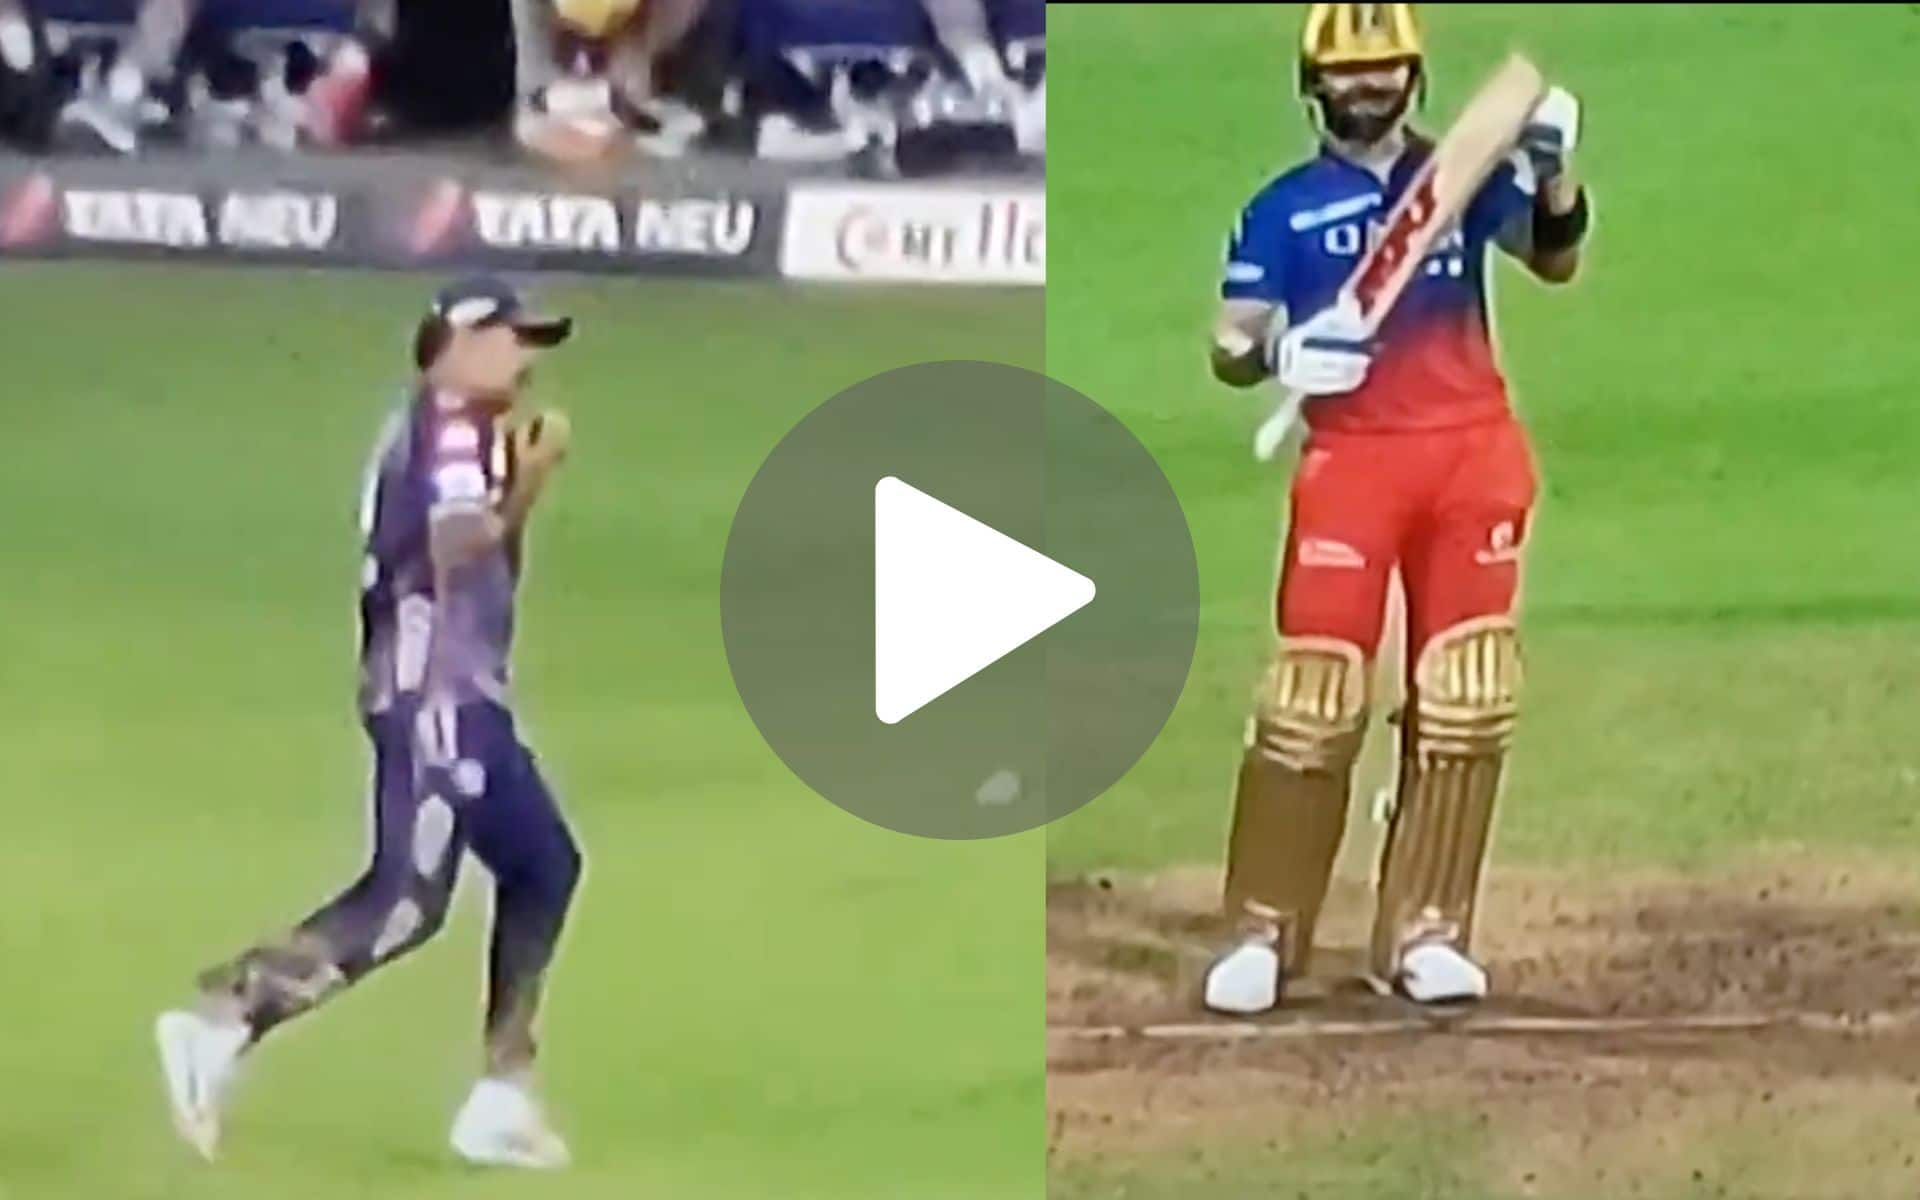 [Watch] Virat Kohli's Hilarious Reaction As Sunil Narine Drops An Easy Catch